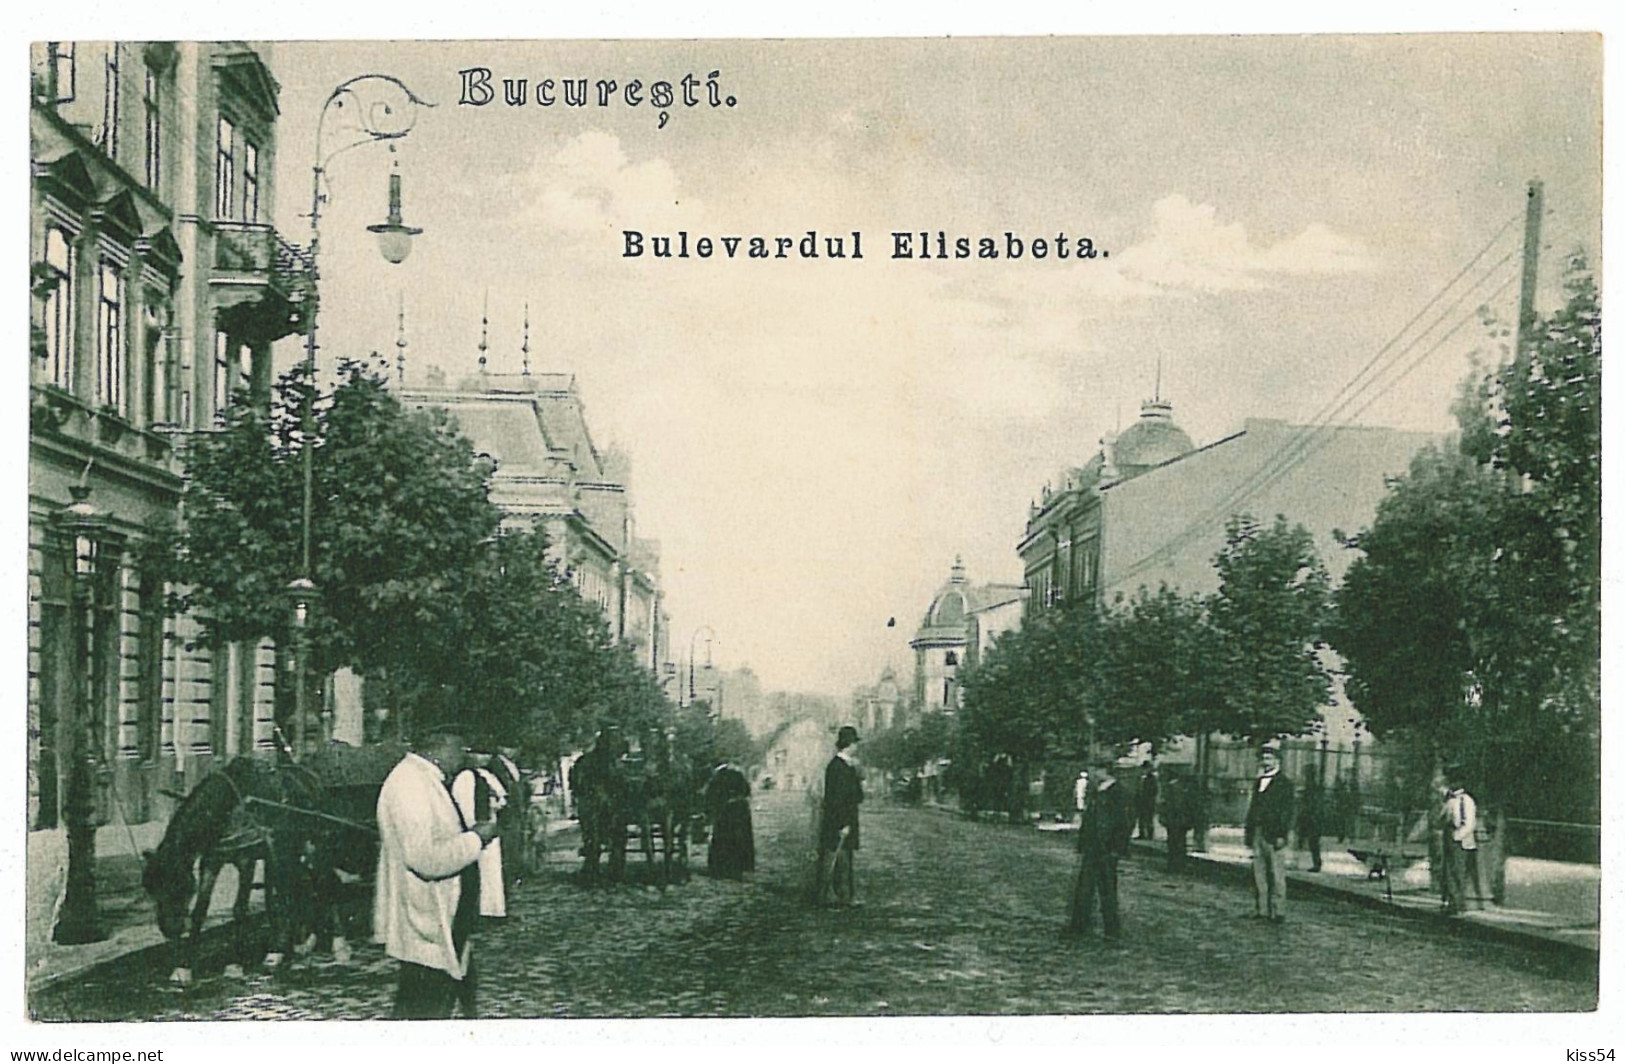 RO 52 - 3875 BUCURESTI,  Elisabeta Ave. Romania - Old Postcard - Unused - Romania